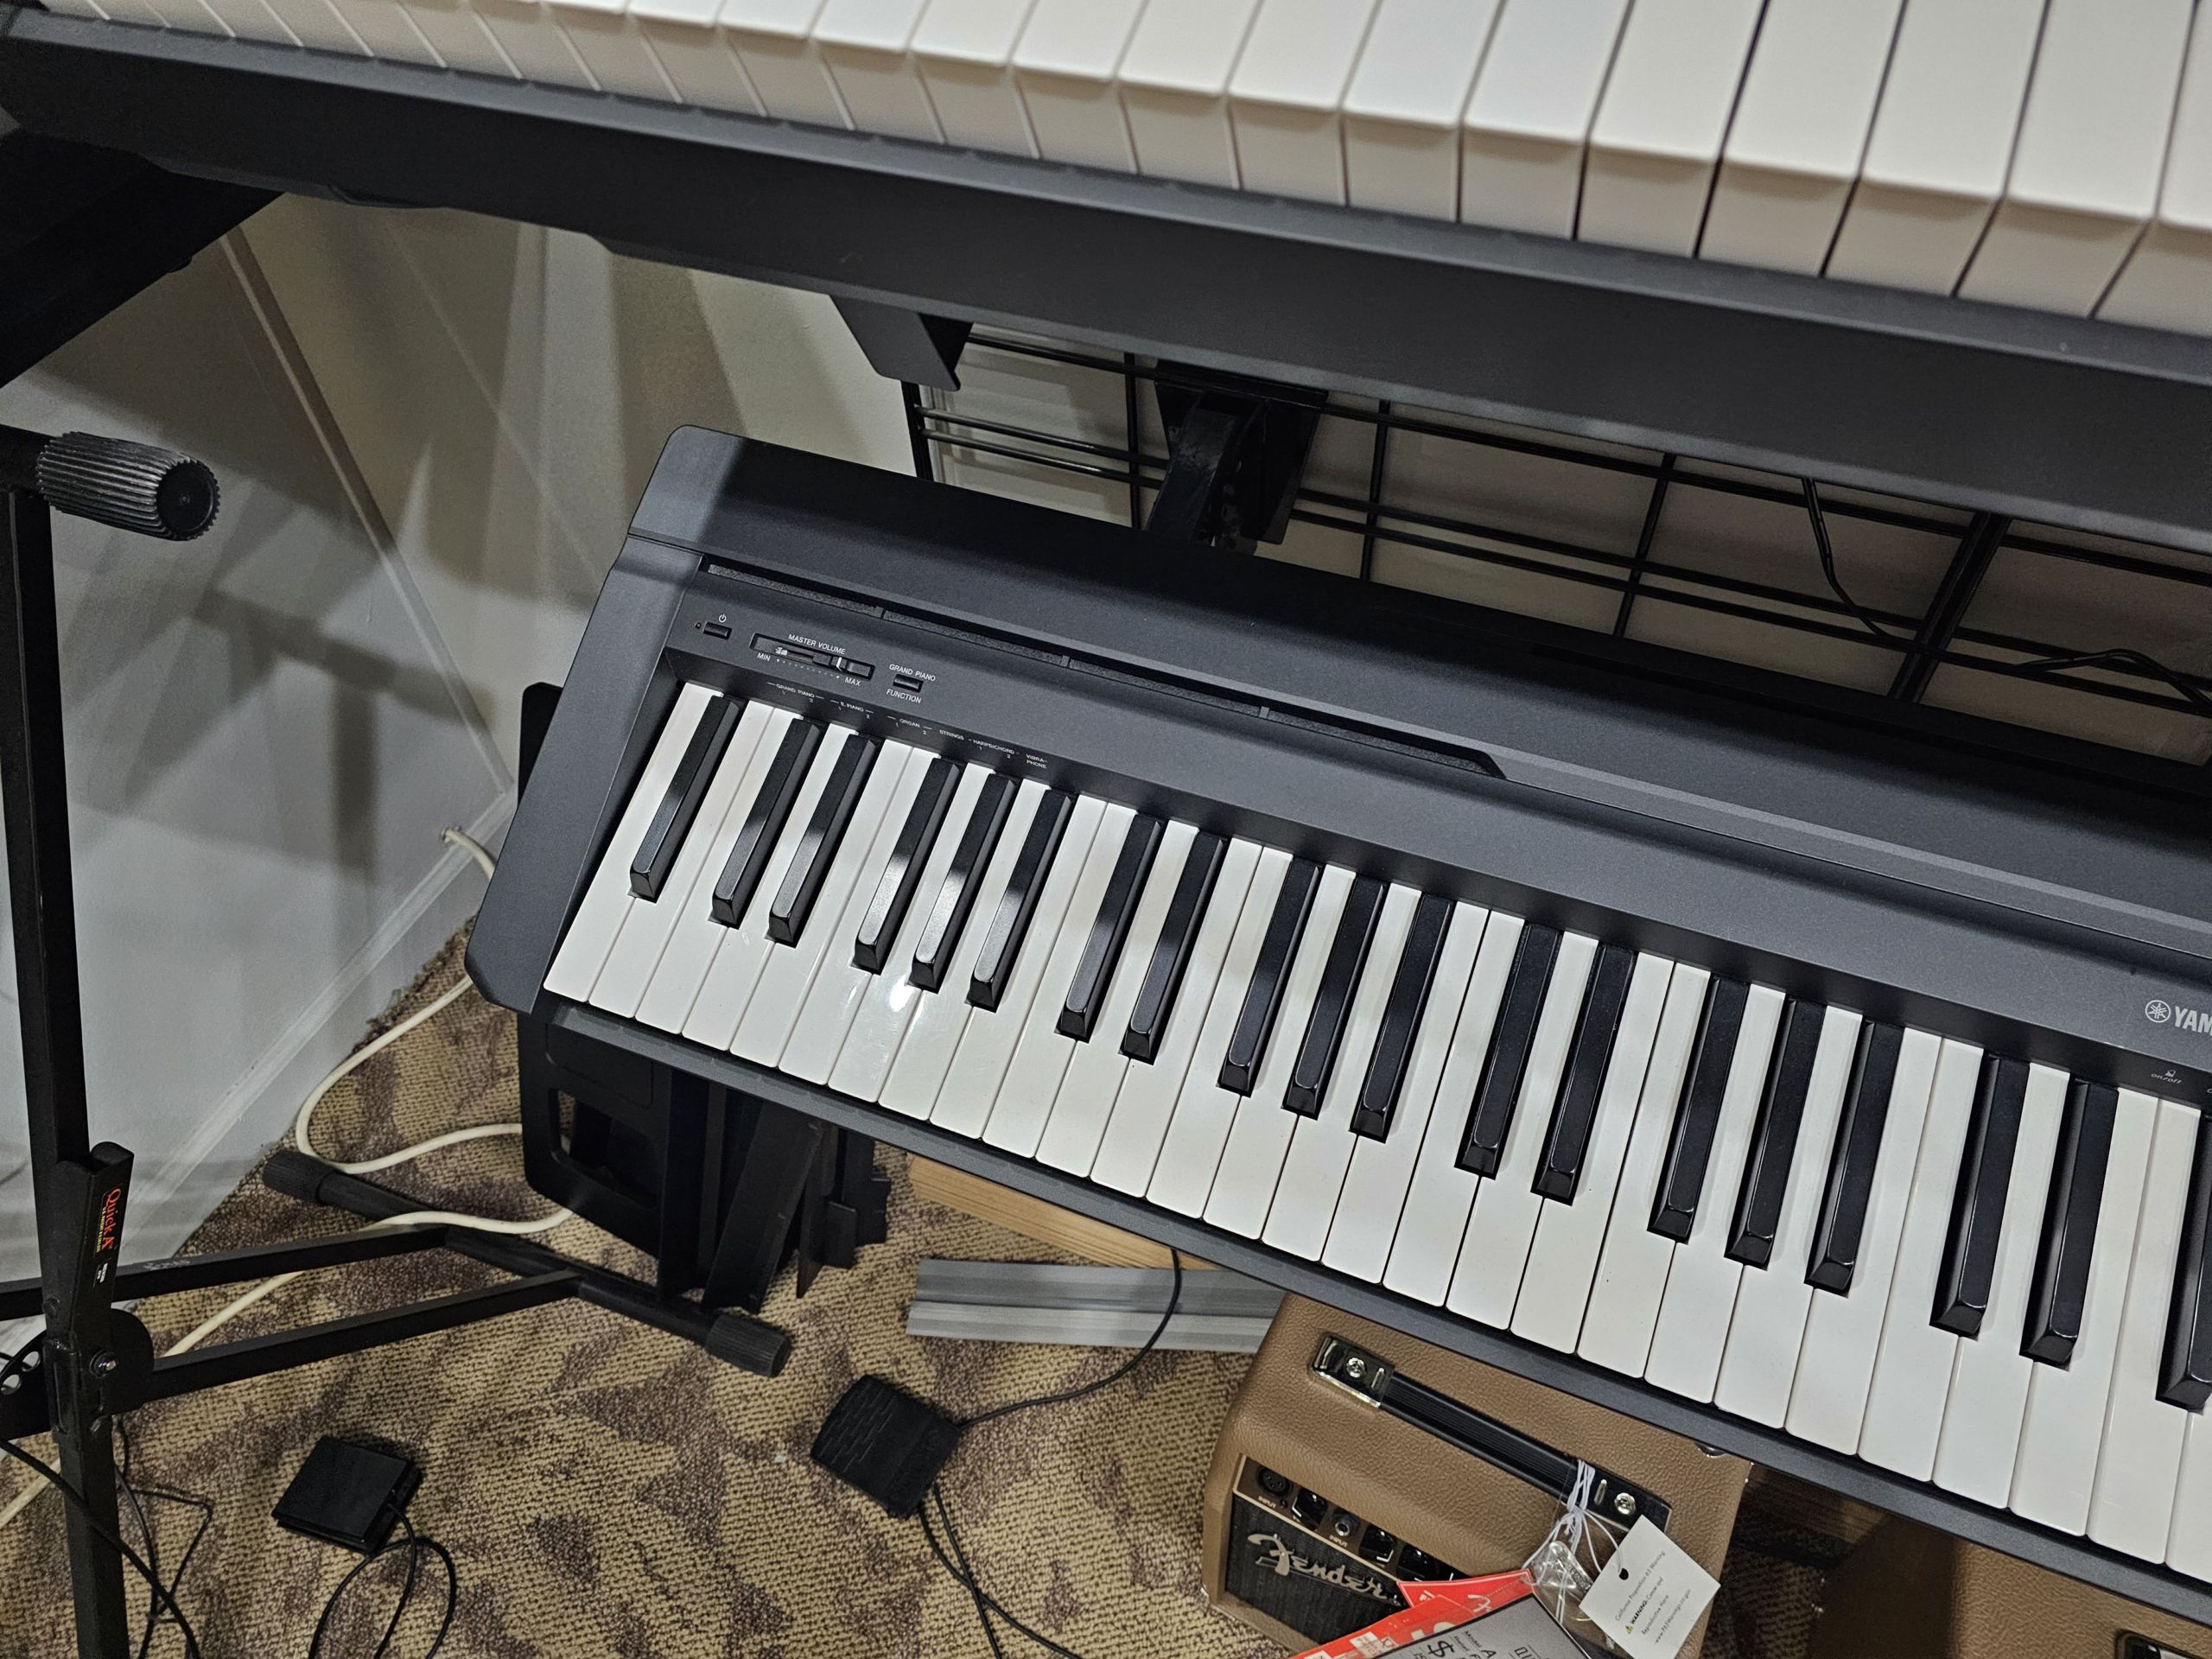 Yamaha P-45 88-key Portable Digital Piano